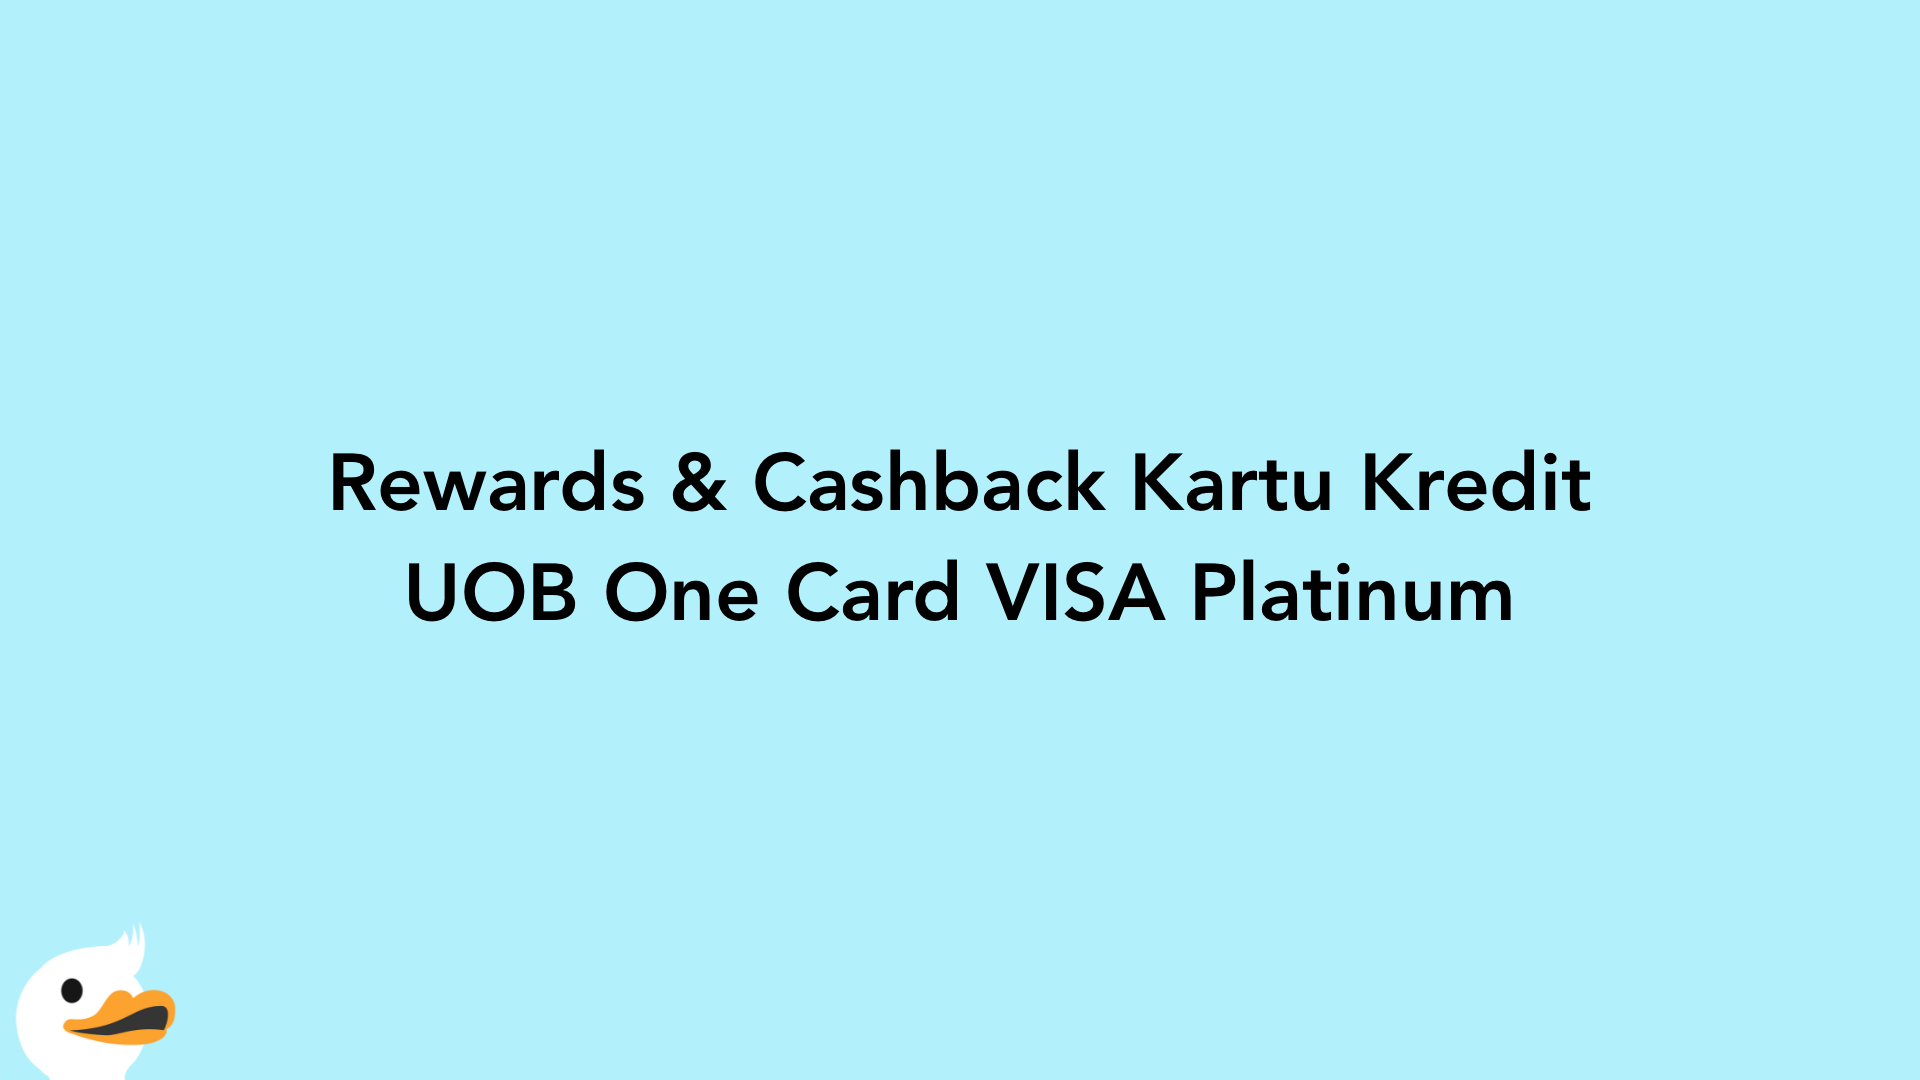 Rewards & Cashback Kartu Kredit UOB One Card VISA Platinum